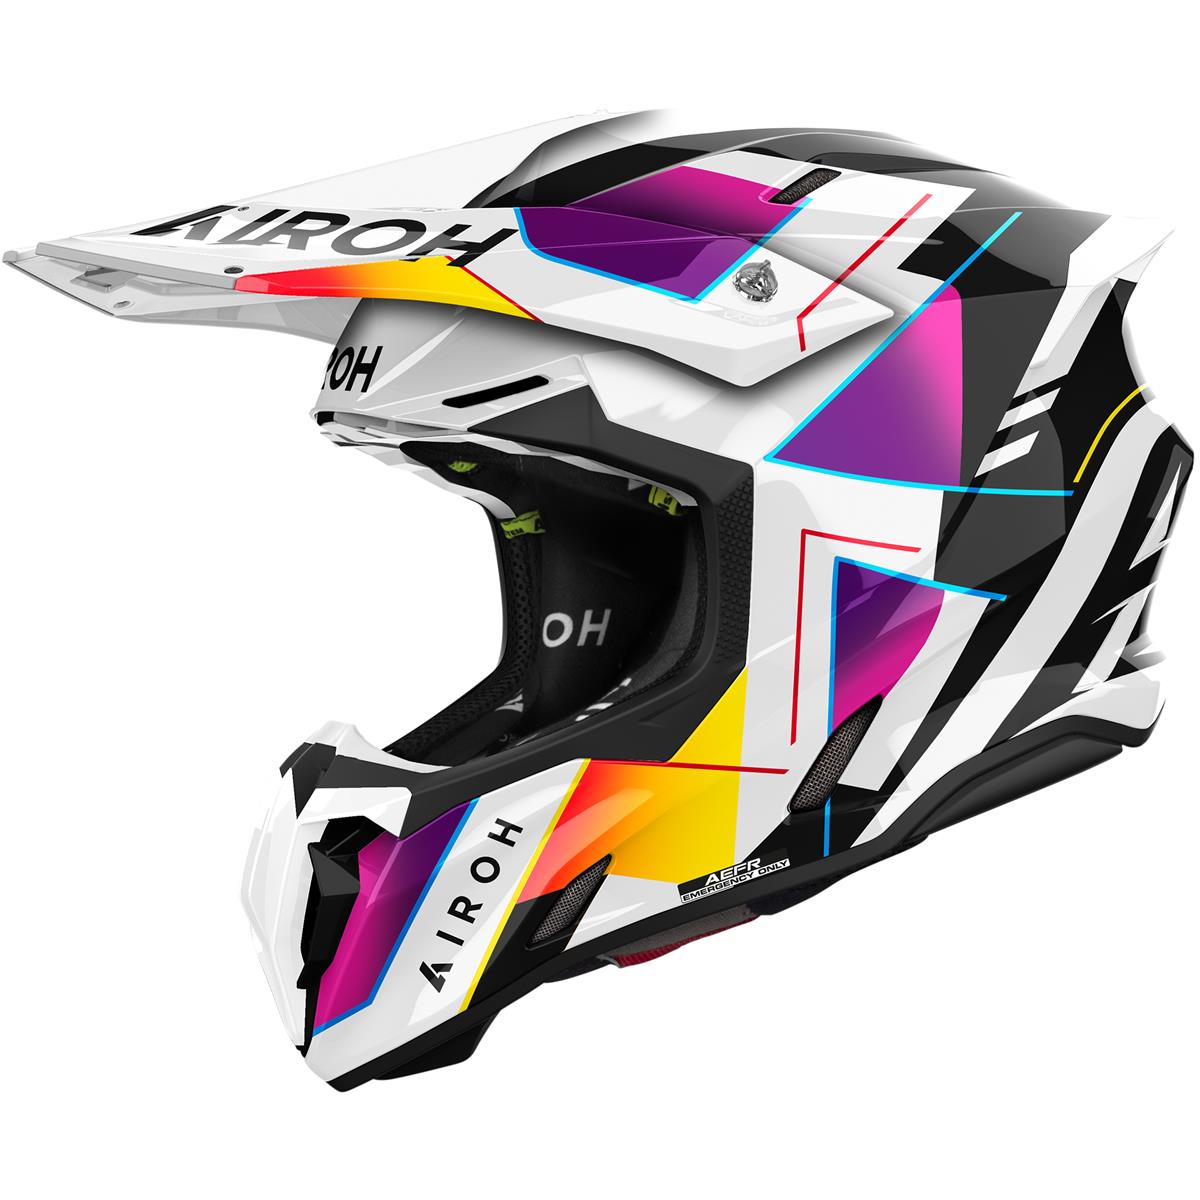 Airoh Motocross-Helm Twist 3